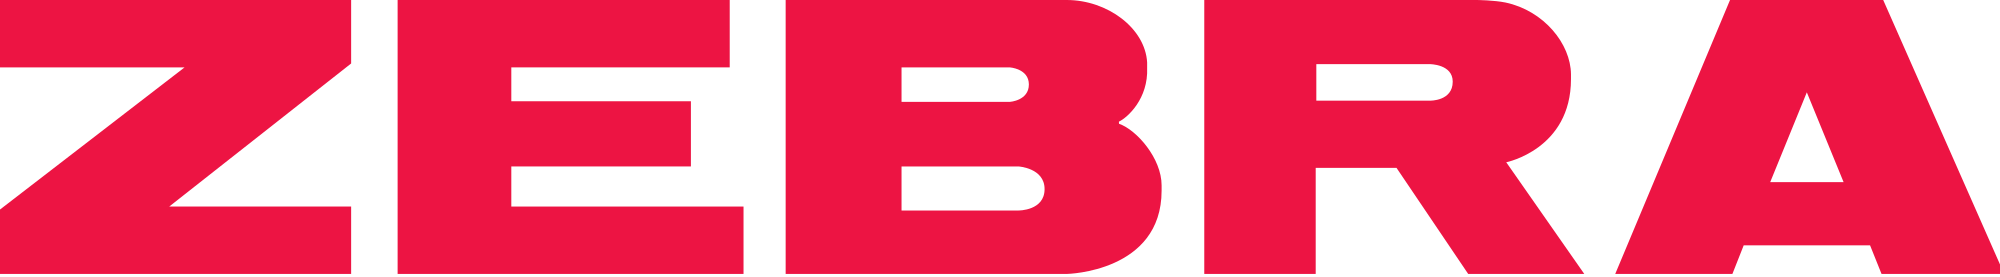 Zebra Company Logo - File:Zebra Pen Company logo.svg - Wikimedia Commons